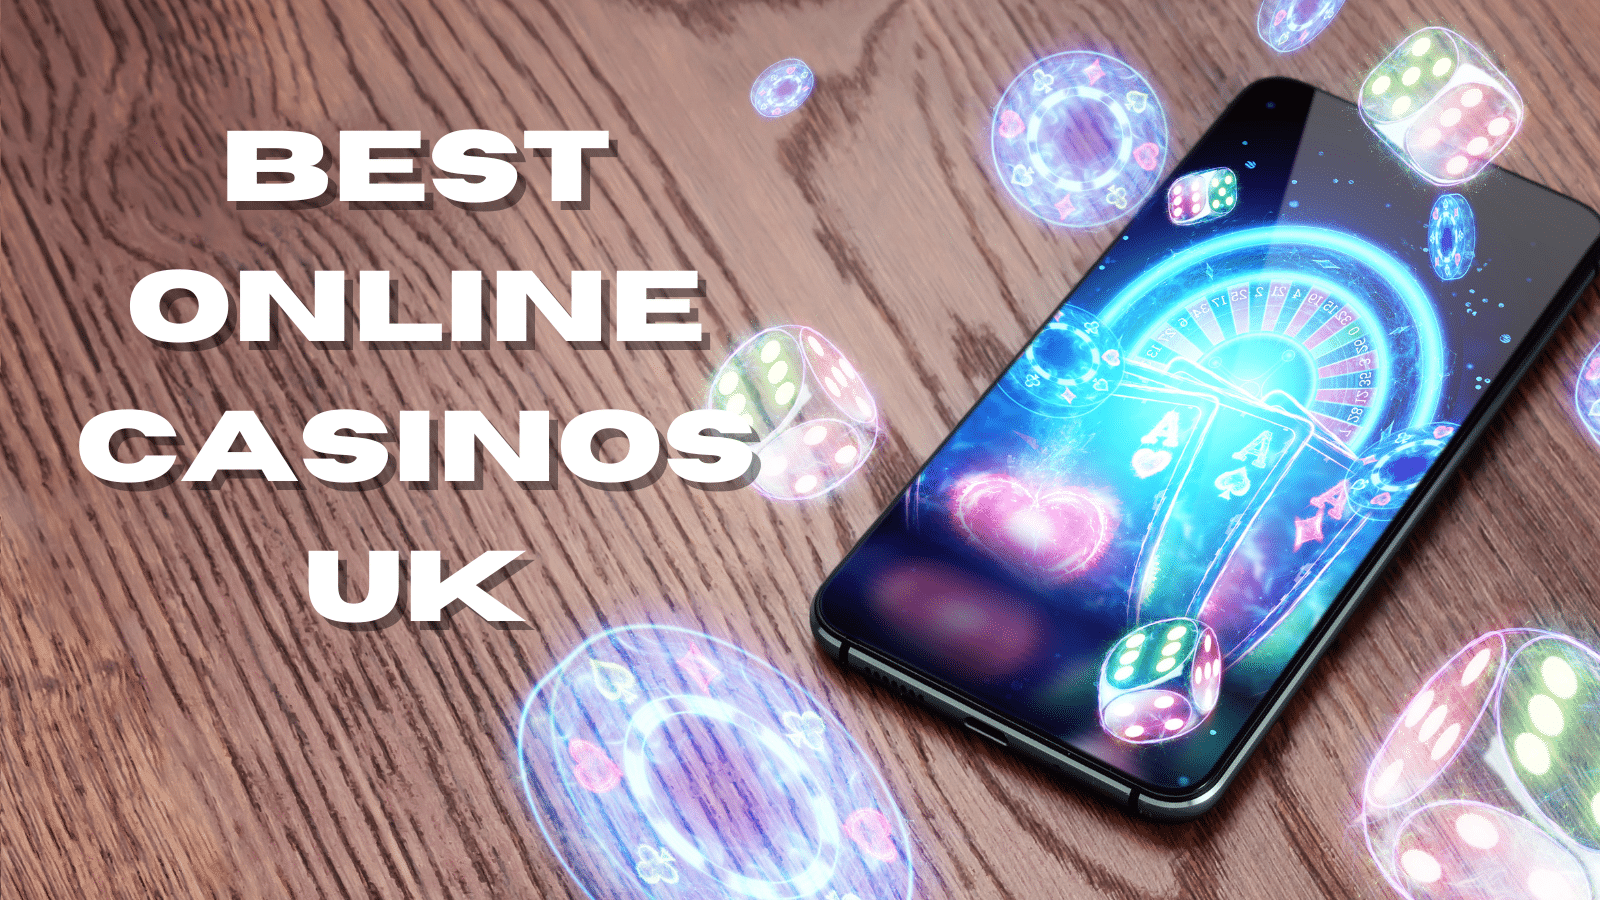 The Best Online Casinos in the UK